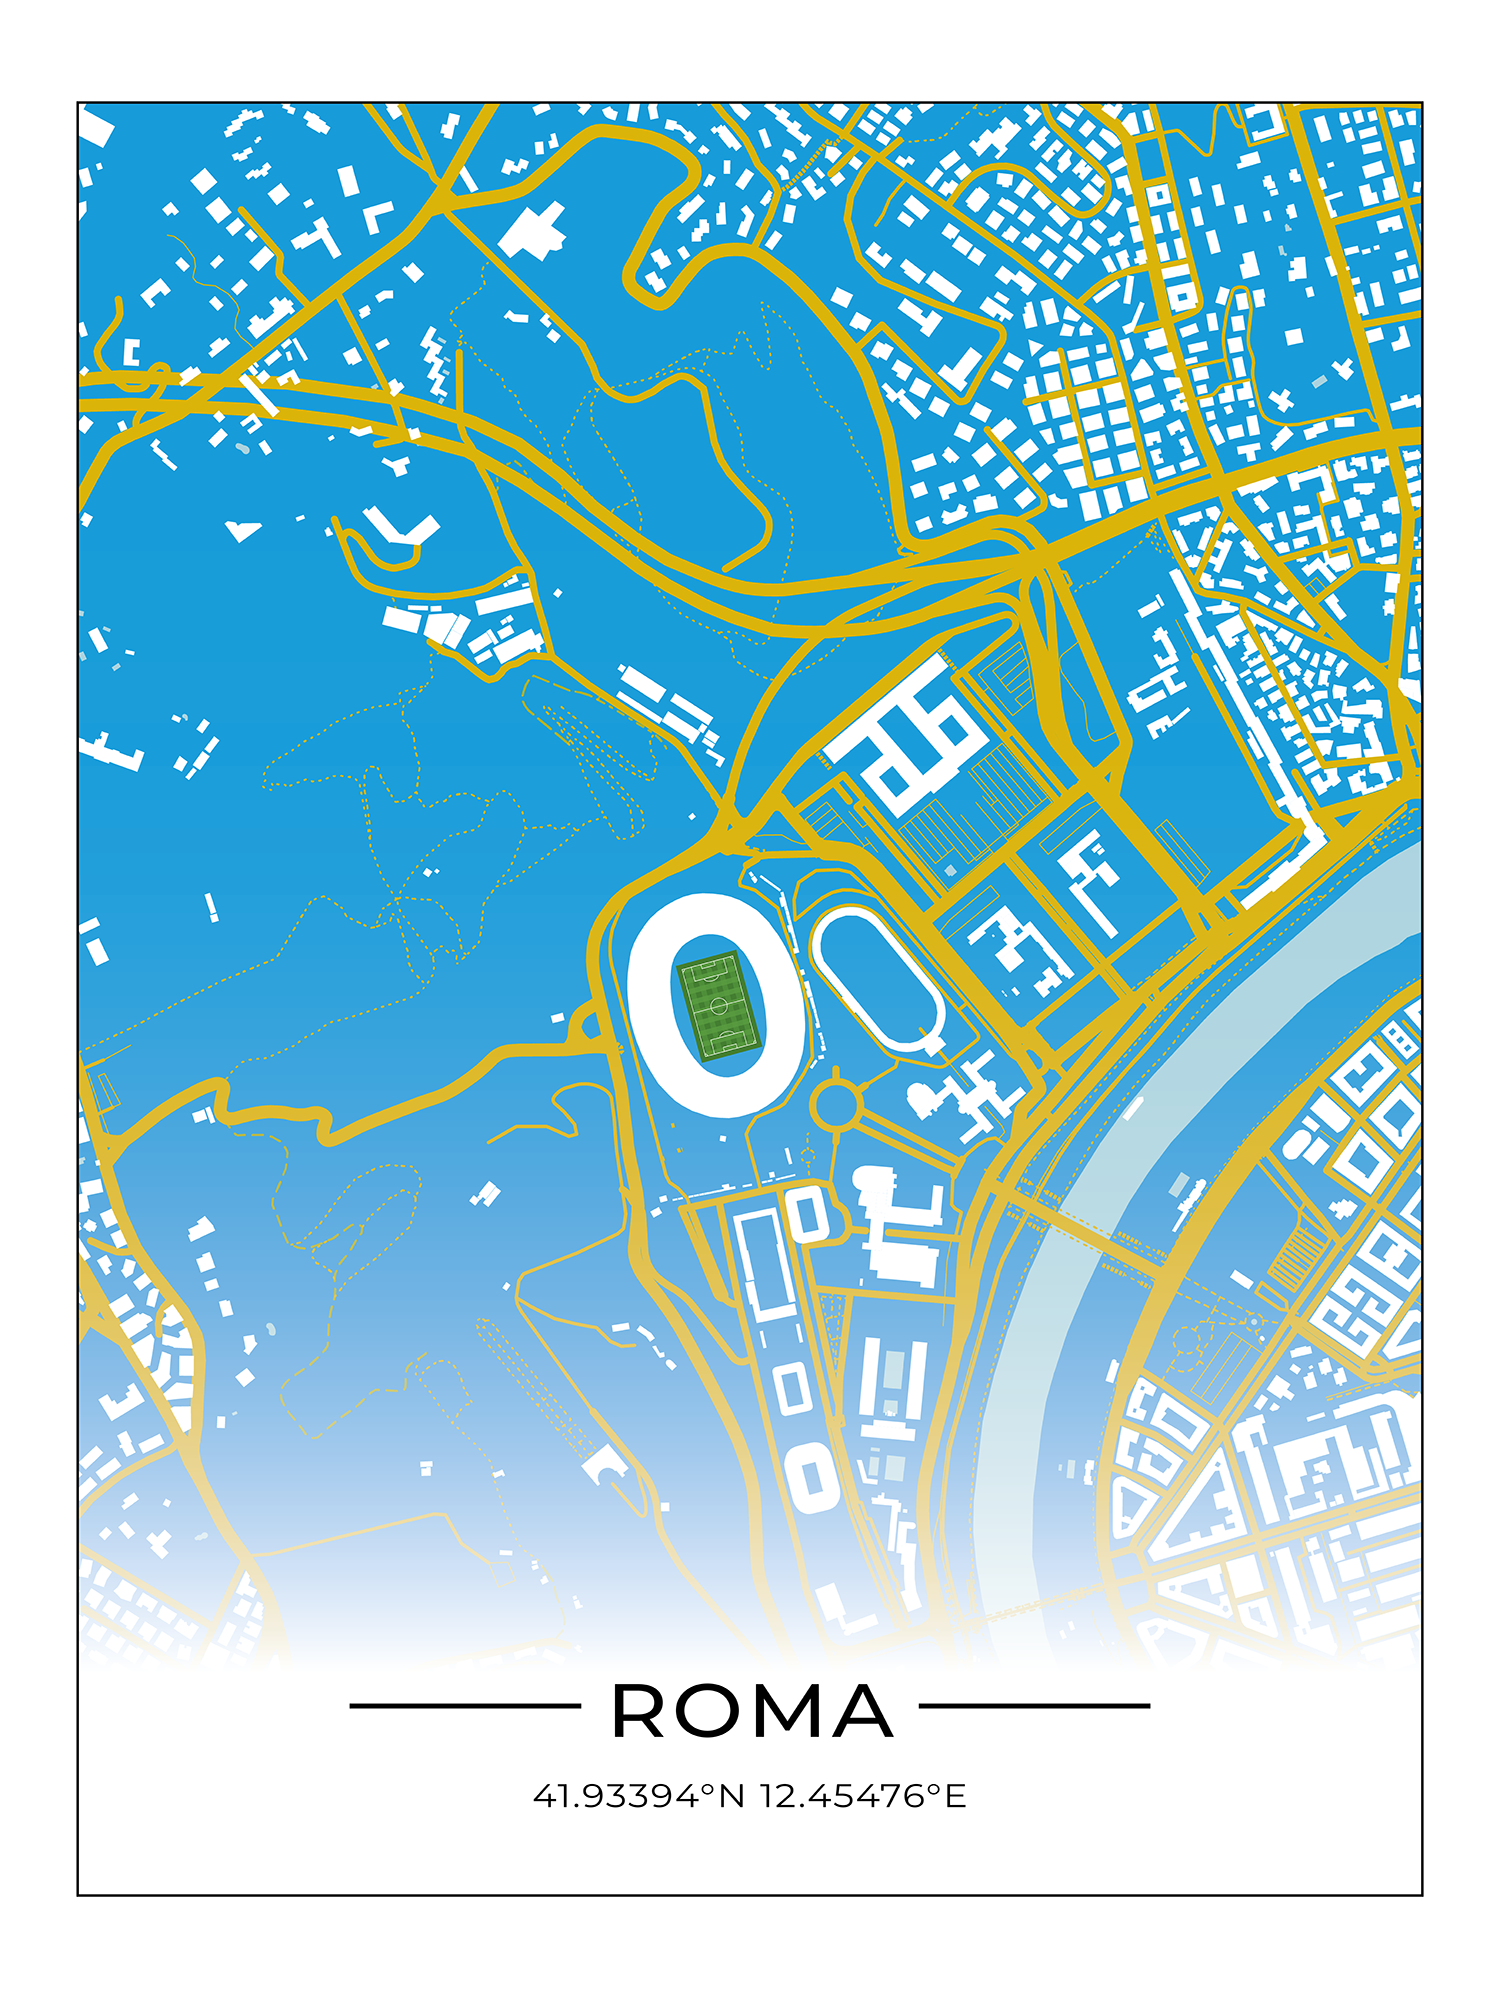 Stadion Poster Rom - Olimpico Roma